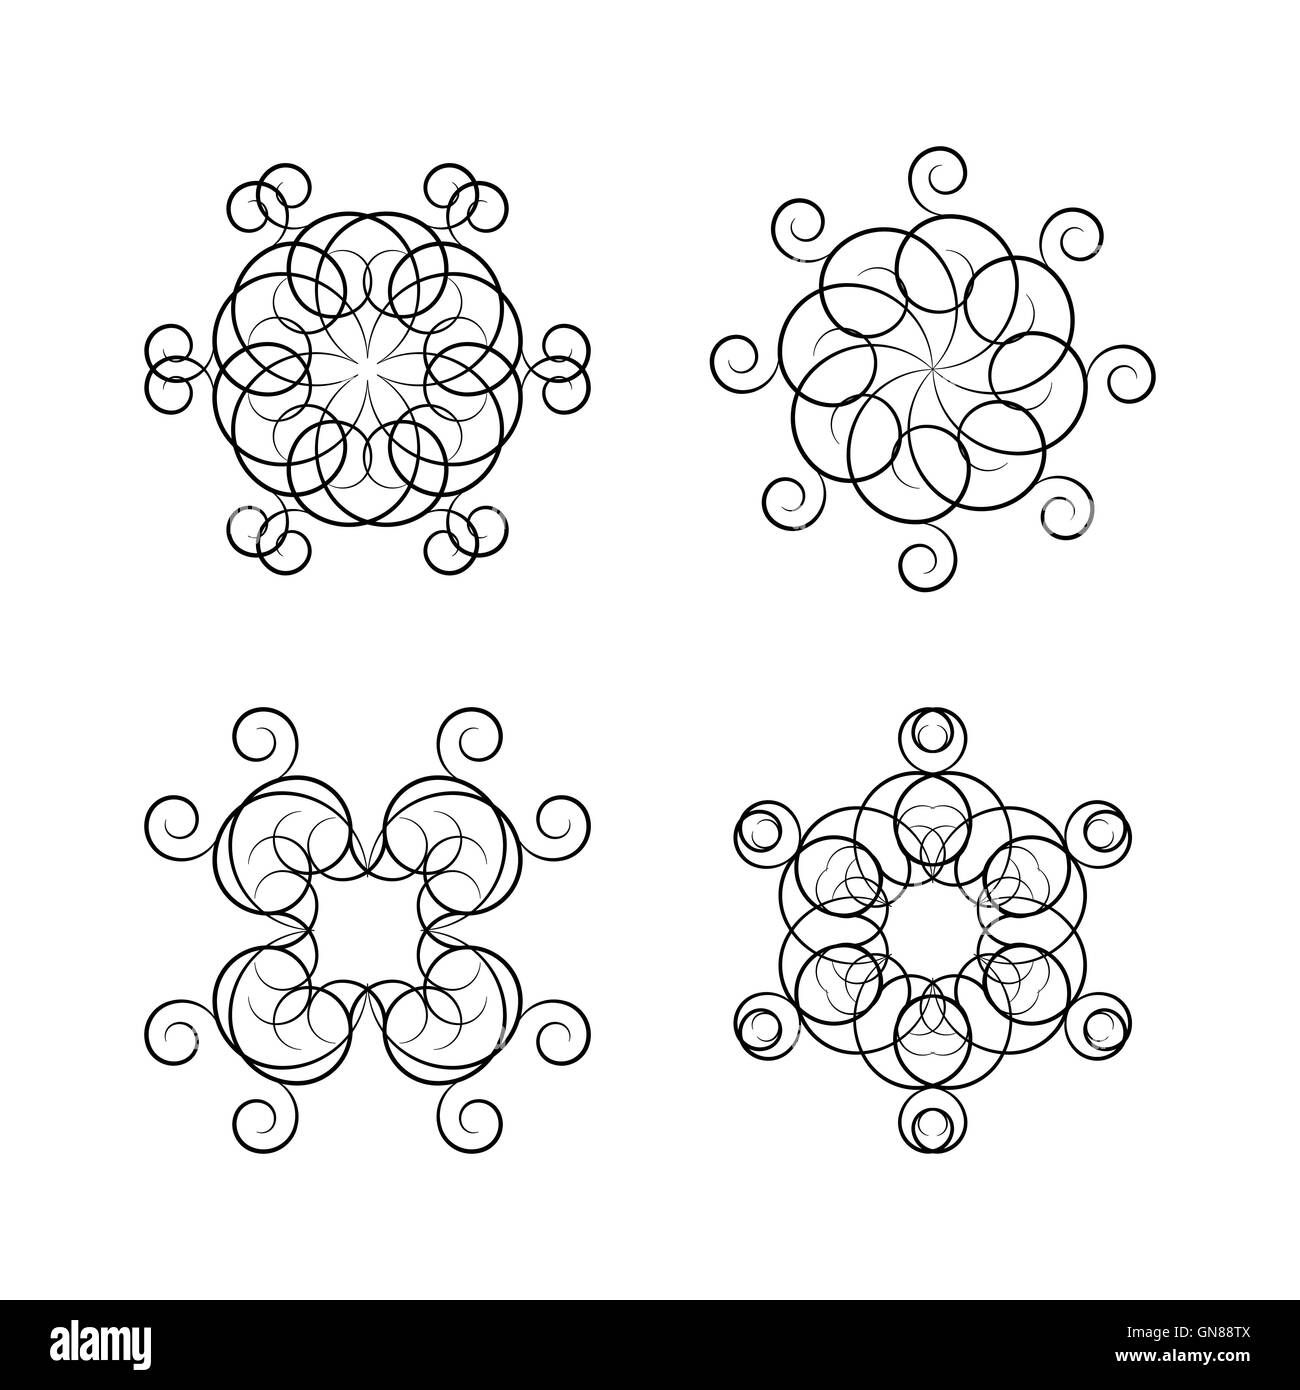 Eine Reihe von kreisförmigen Ornamenten, Vektor-Illustration. Stock Vektor